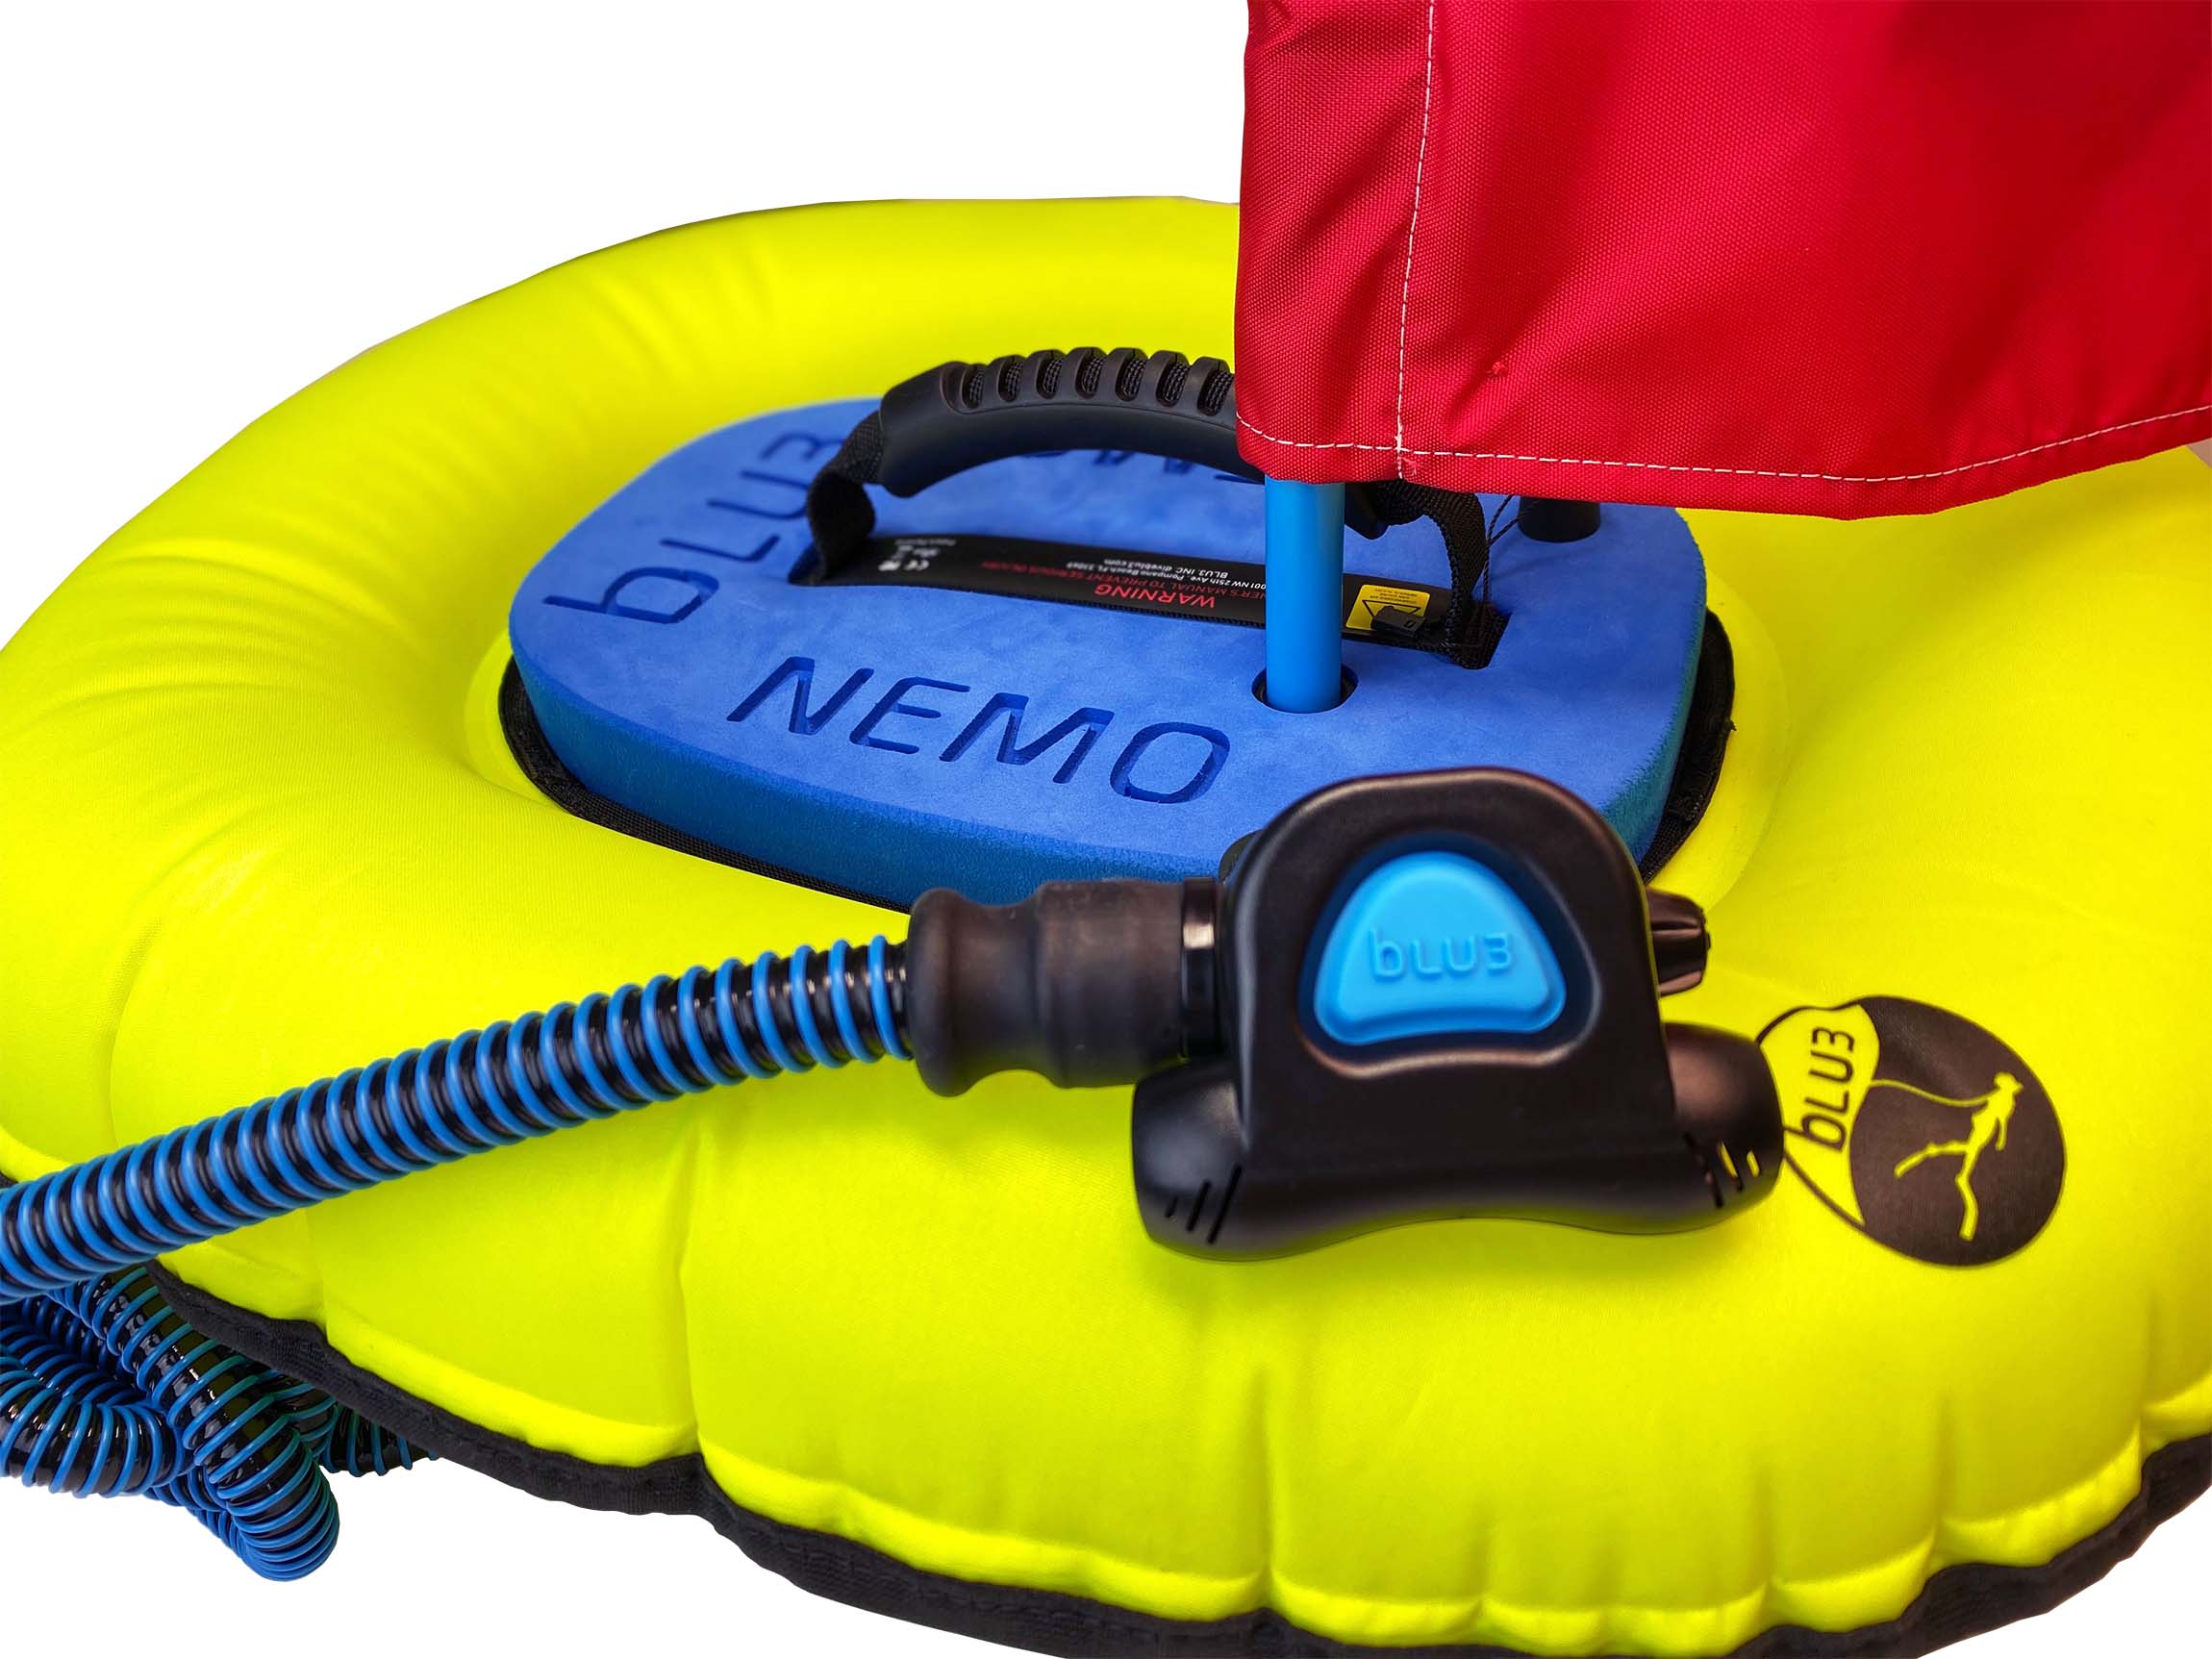 Nemo Blu3 Tauchkompressor mit Boot